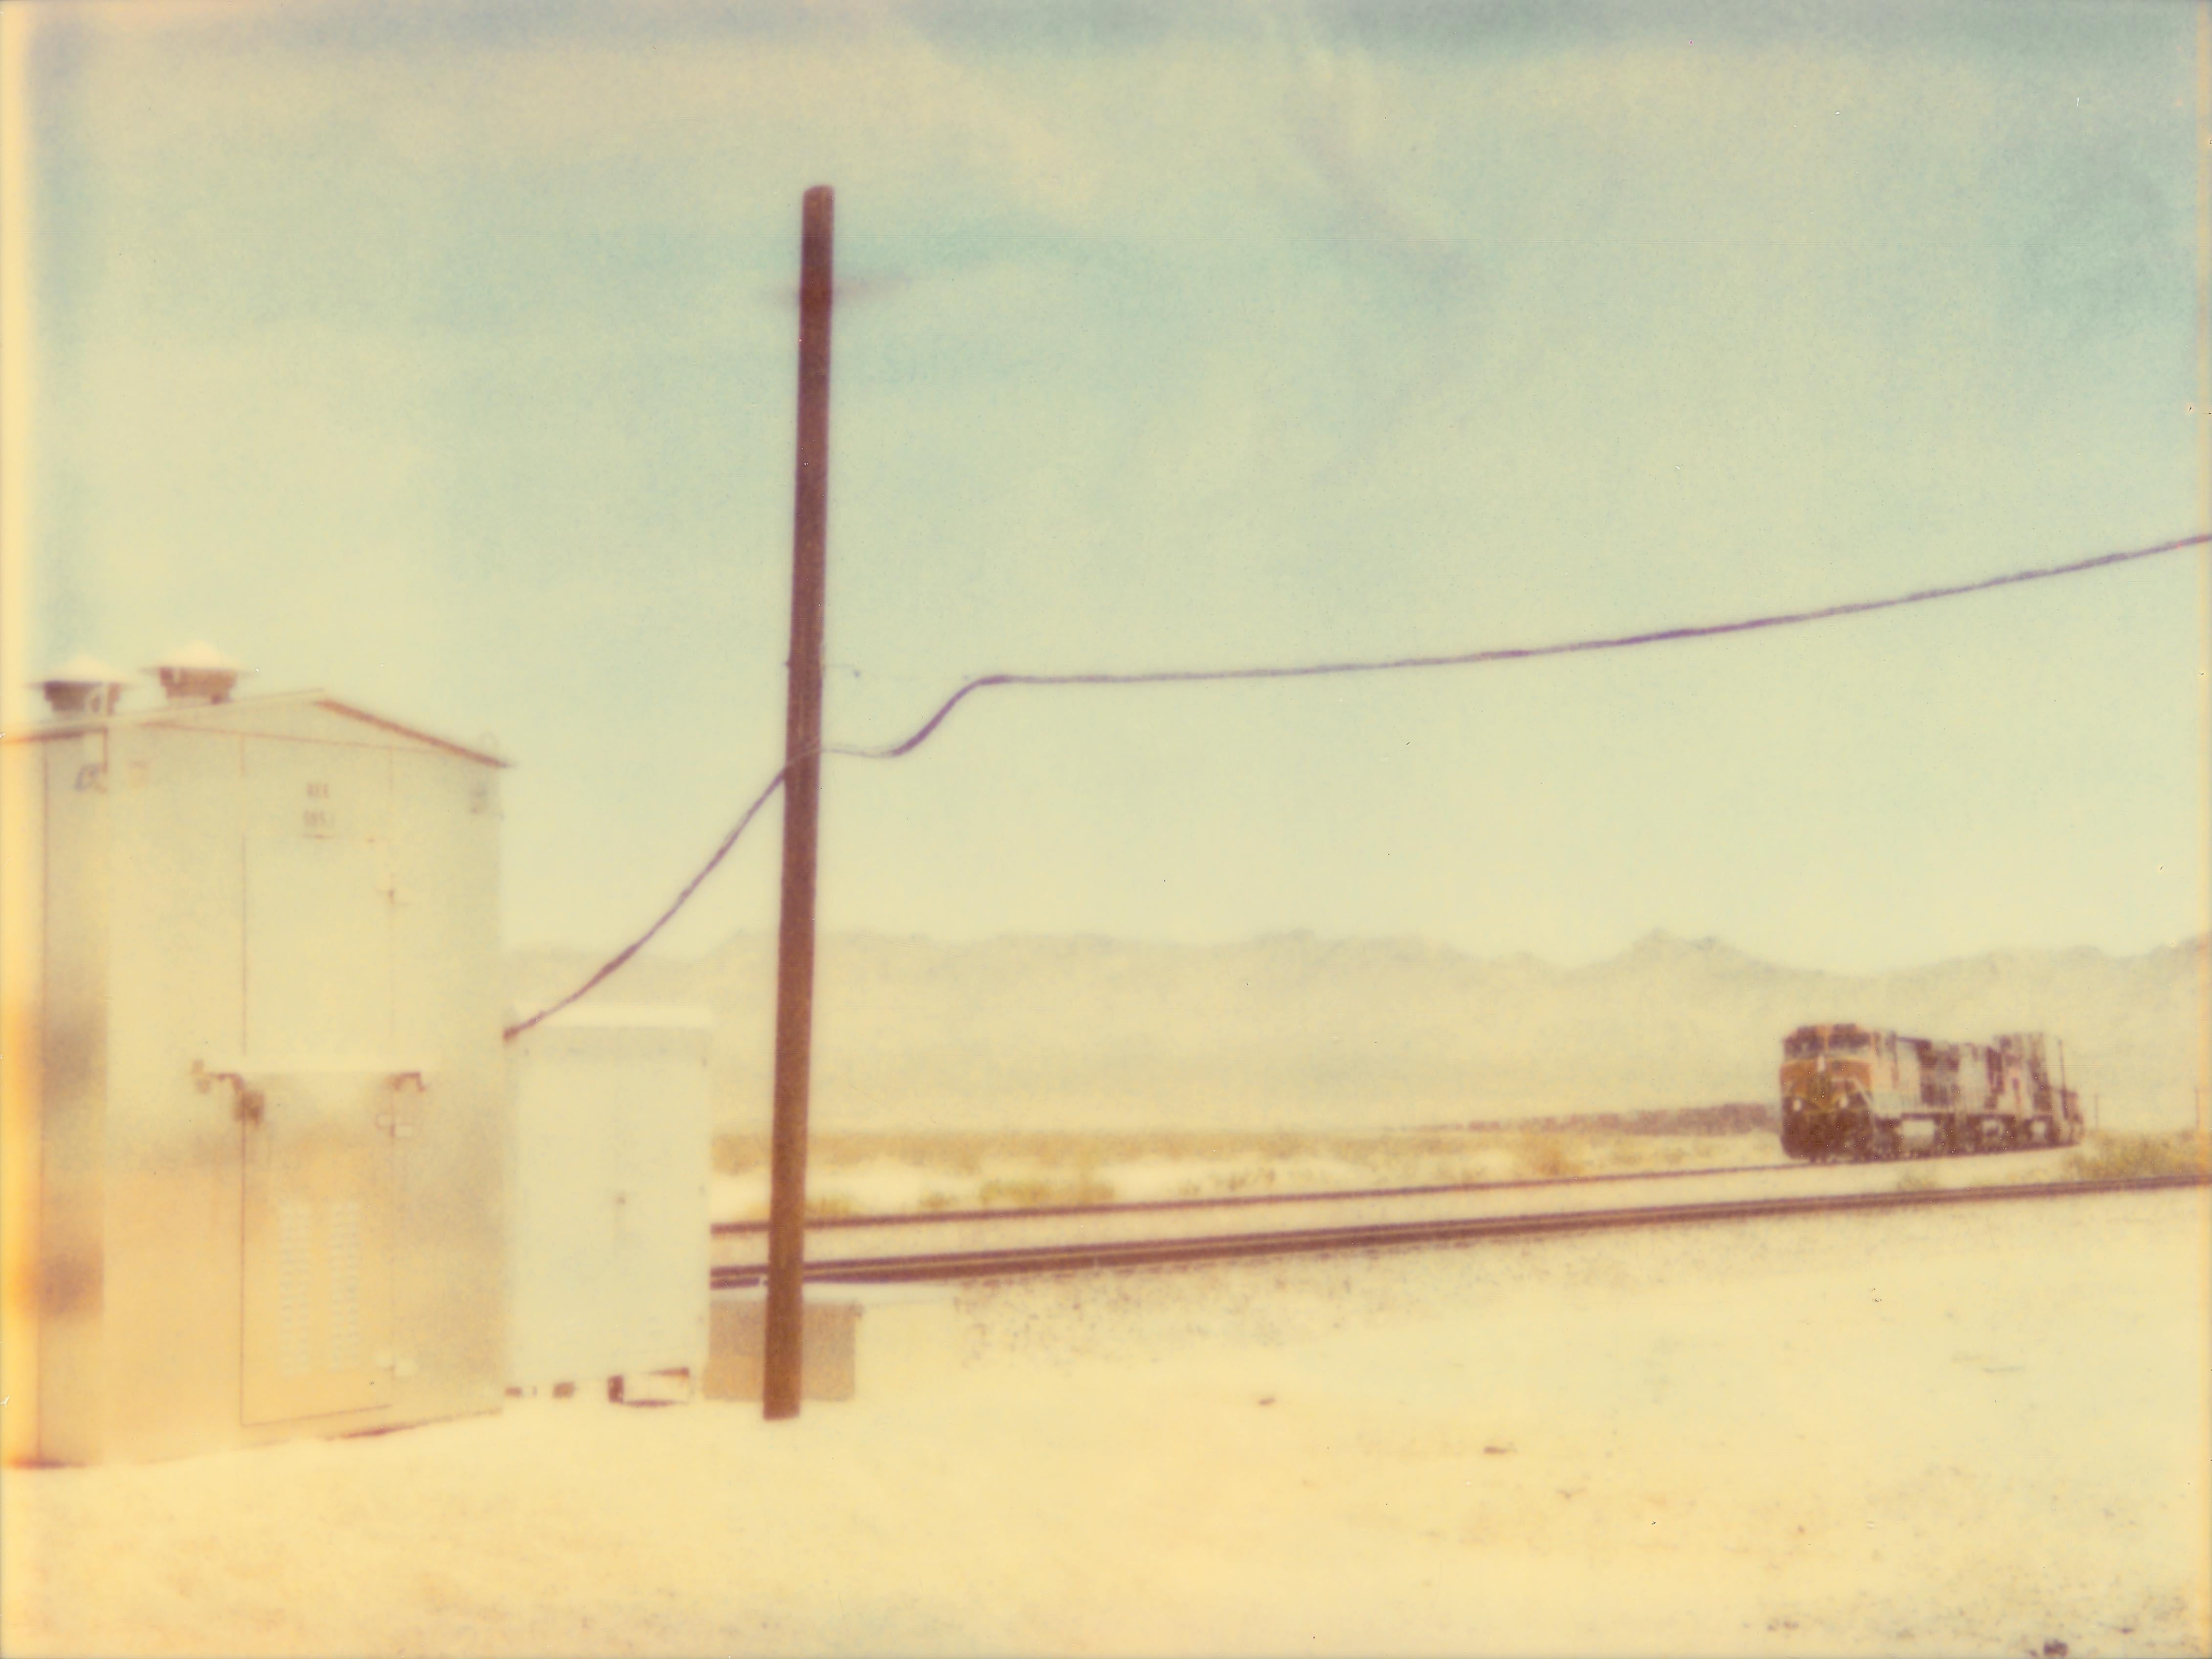 Landscape Photograph Stefanie Schneider - Approaching Train (Wastelands) - Contemporain, Paysage, Polaroid, analogique